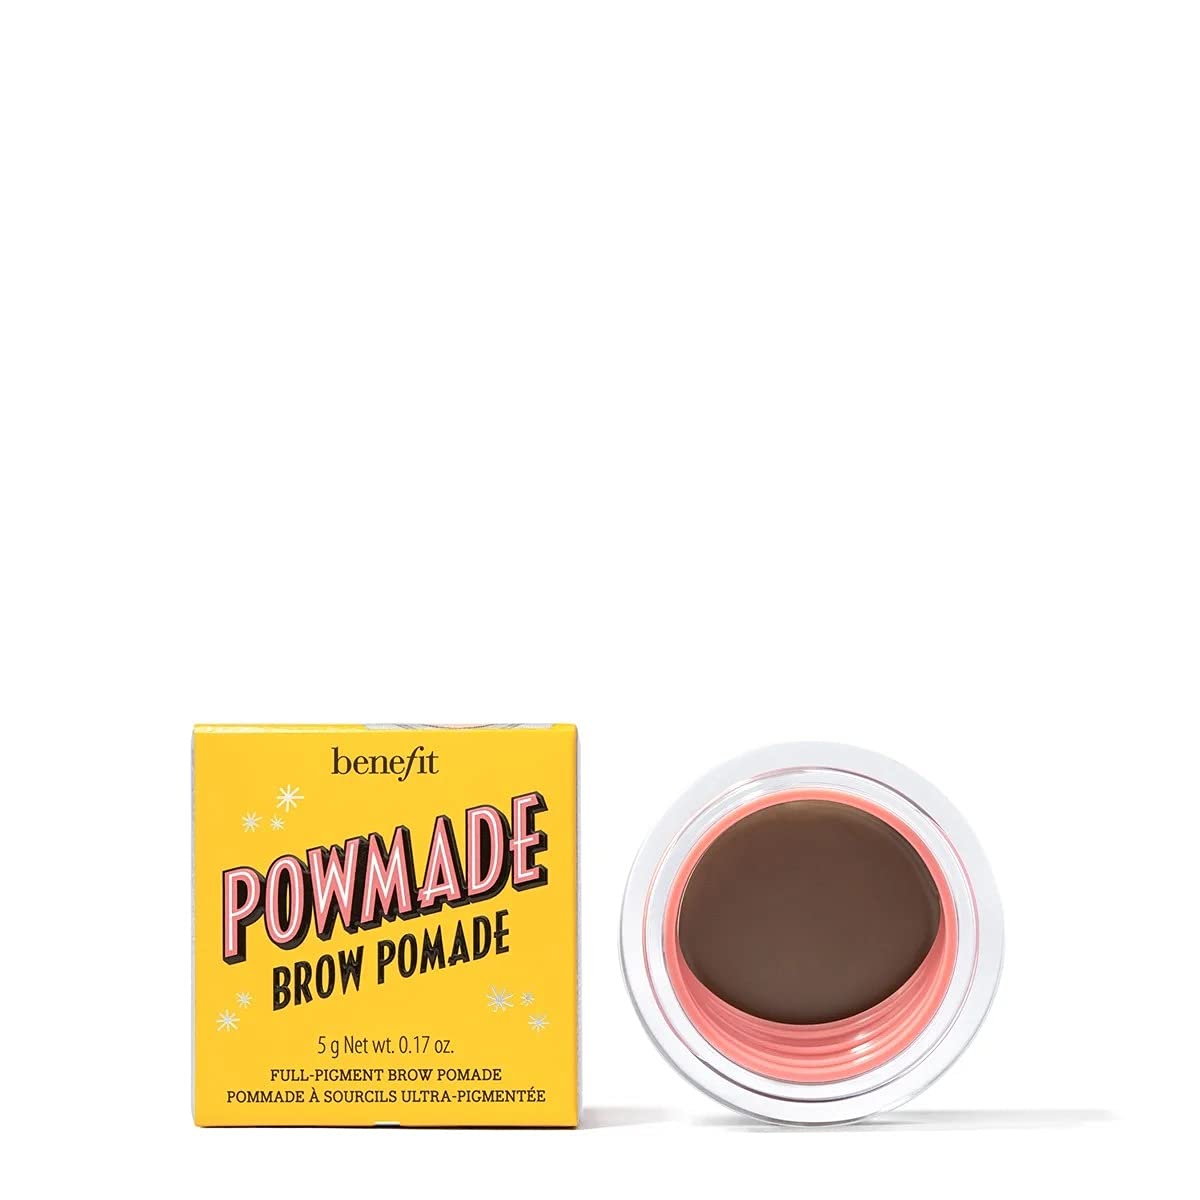 Benefit POWmade Brow Pomade - Shade 2.5 - Neutral Blonde, ‎warm golden